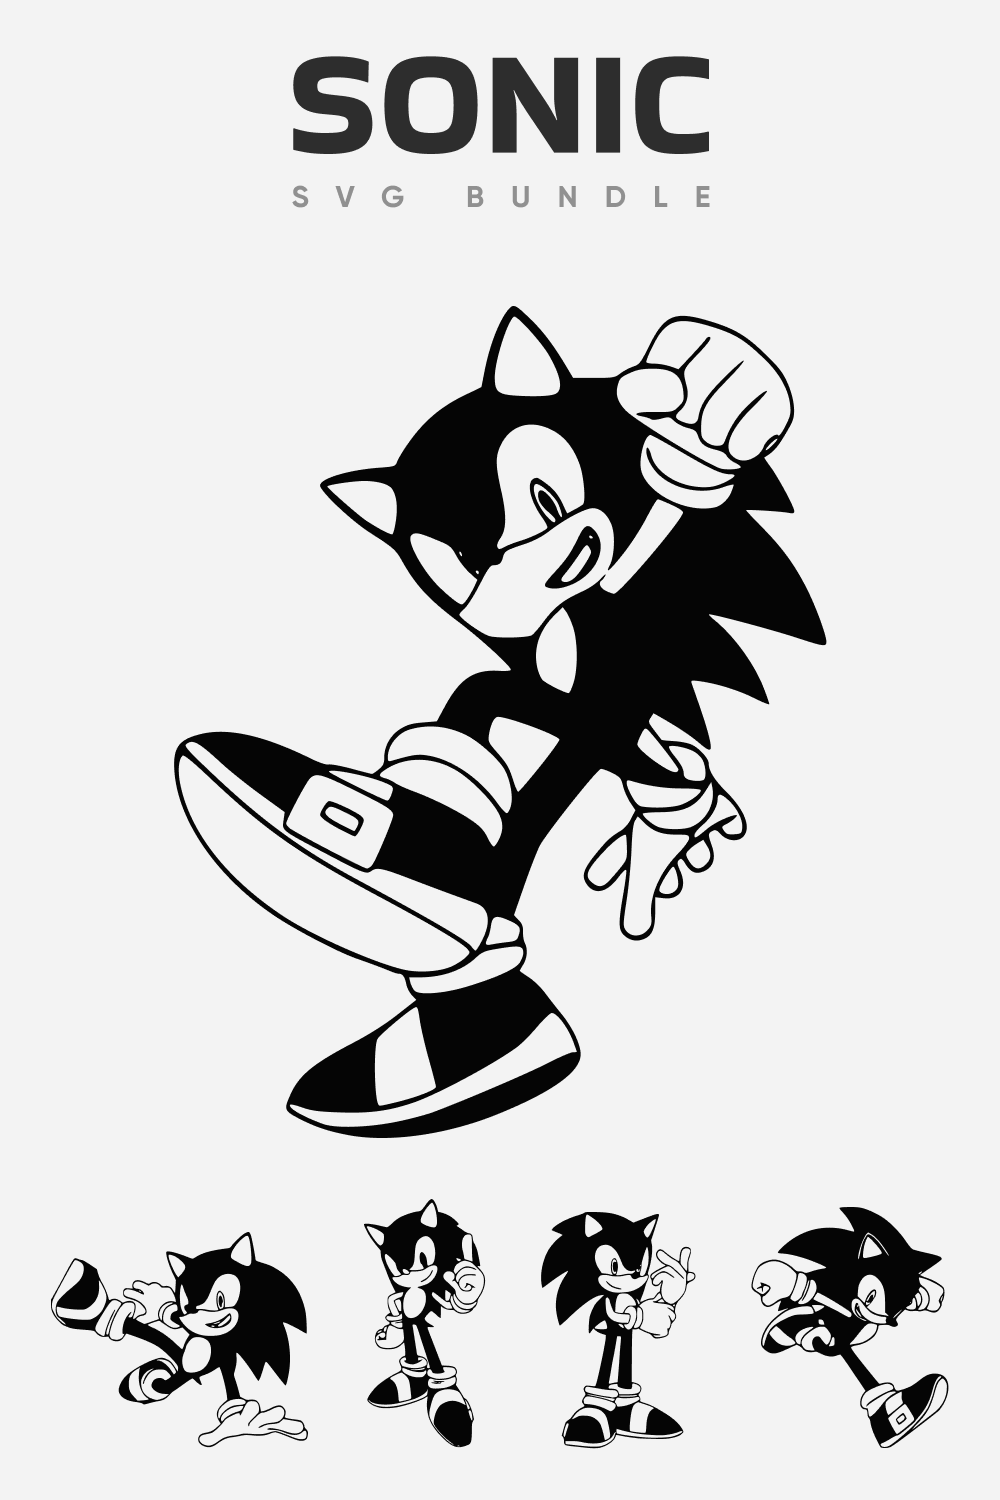 Sonic SVG bundle.